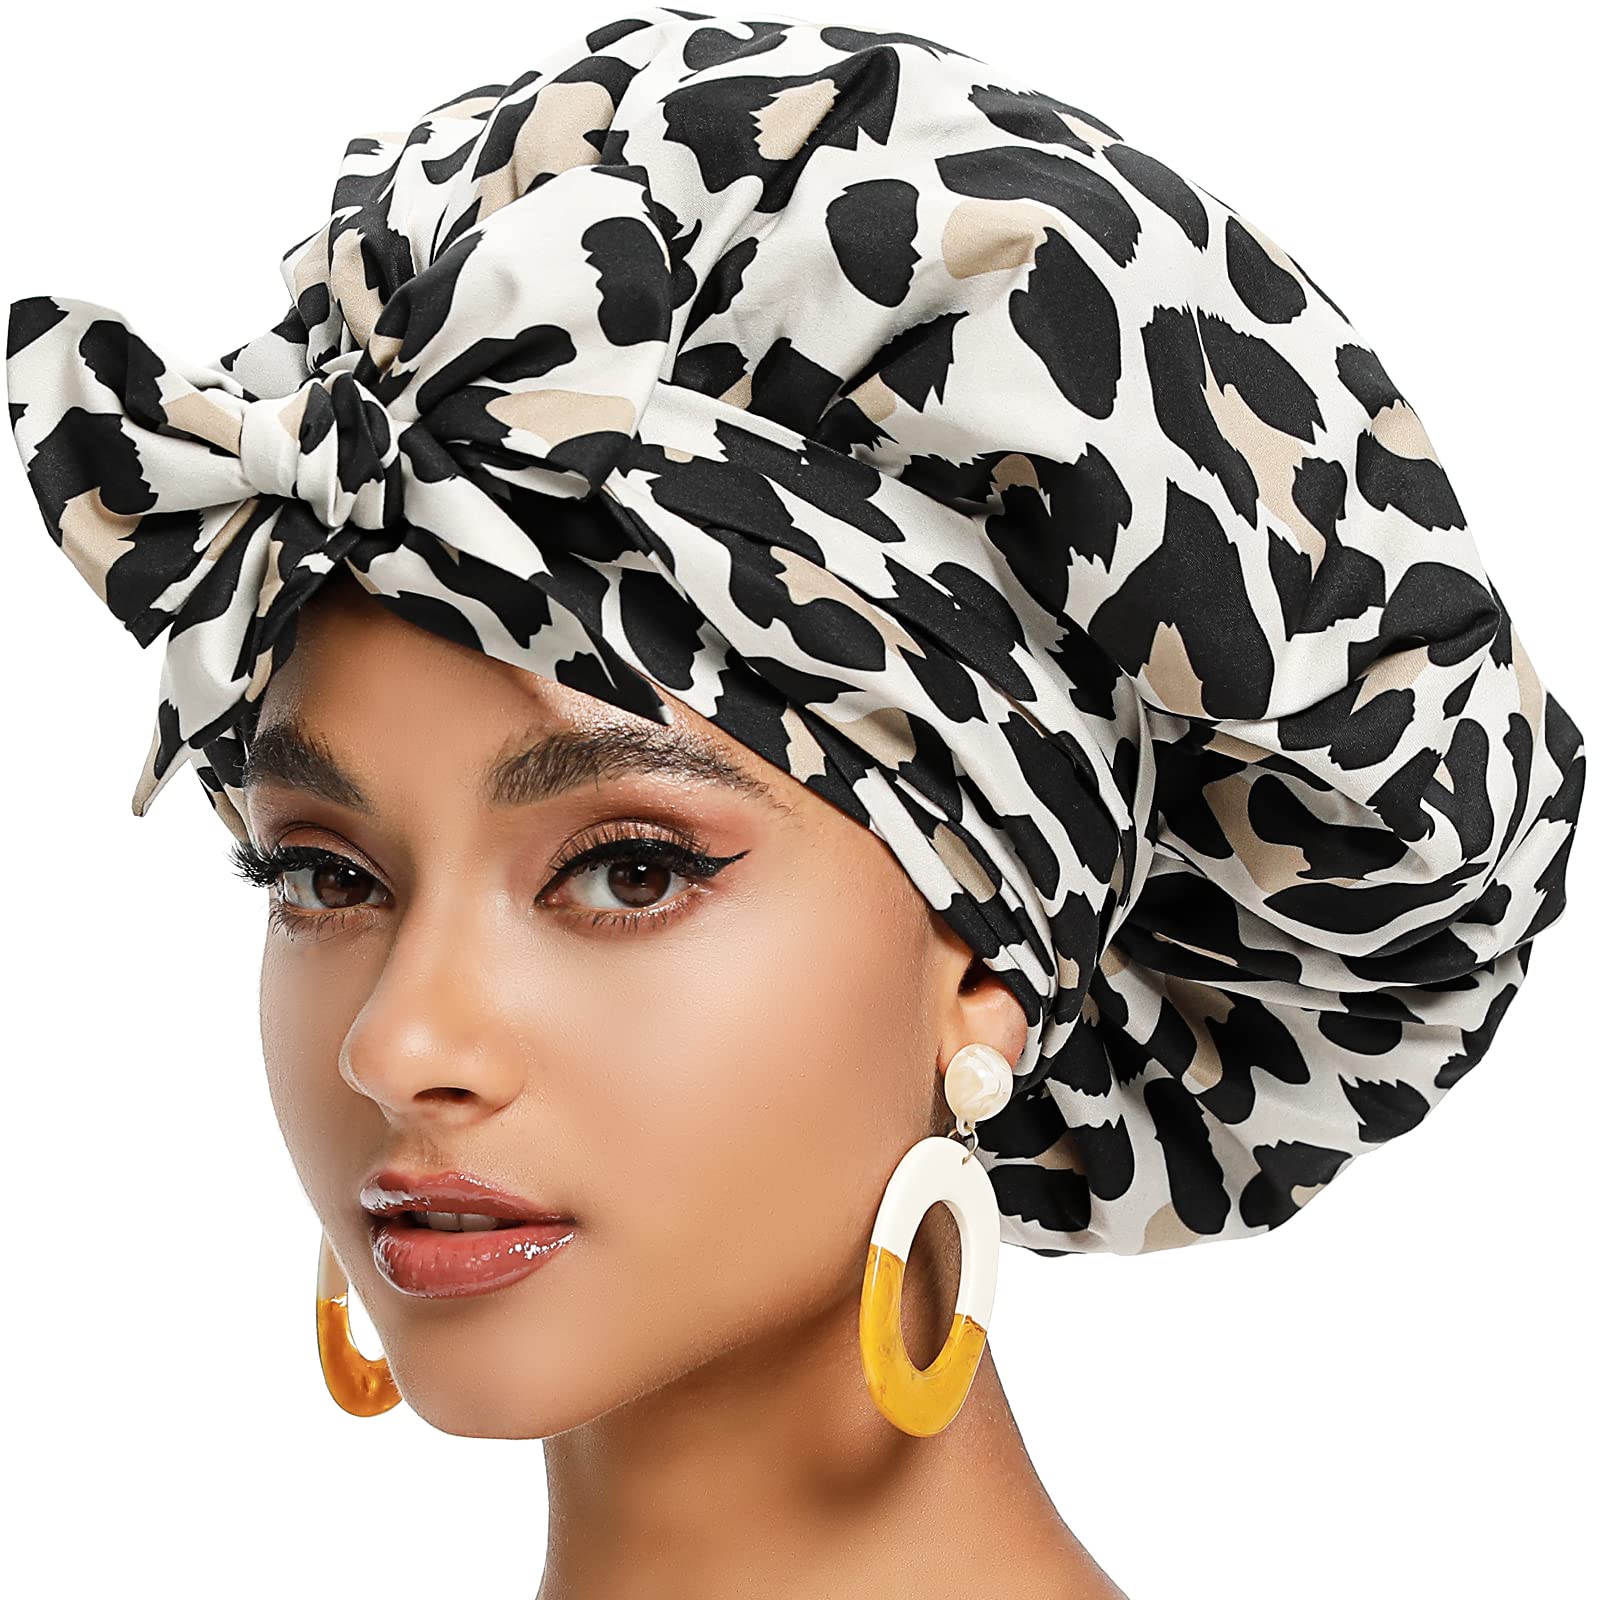 Holly LifePro 3PCS Satin Bonnets for Black Men Women Girls, Extra Large  Band Hair Bonnets with Tie Band, Silk Sleep Braids Bonnet, Style09